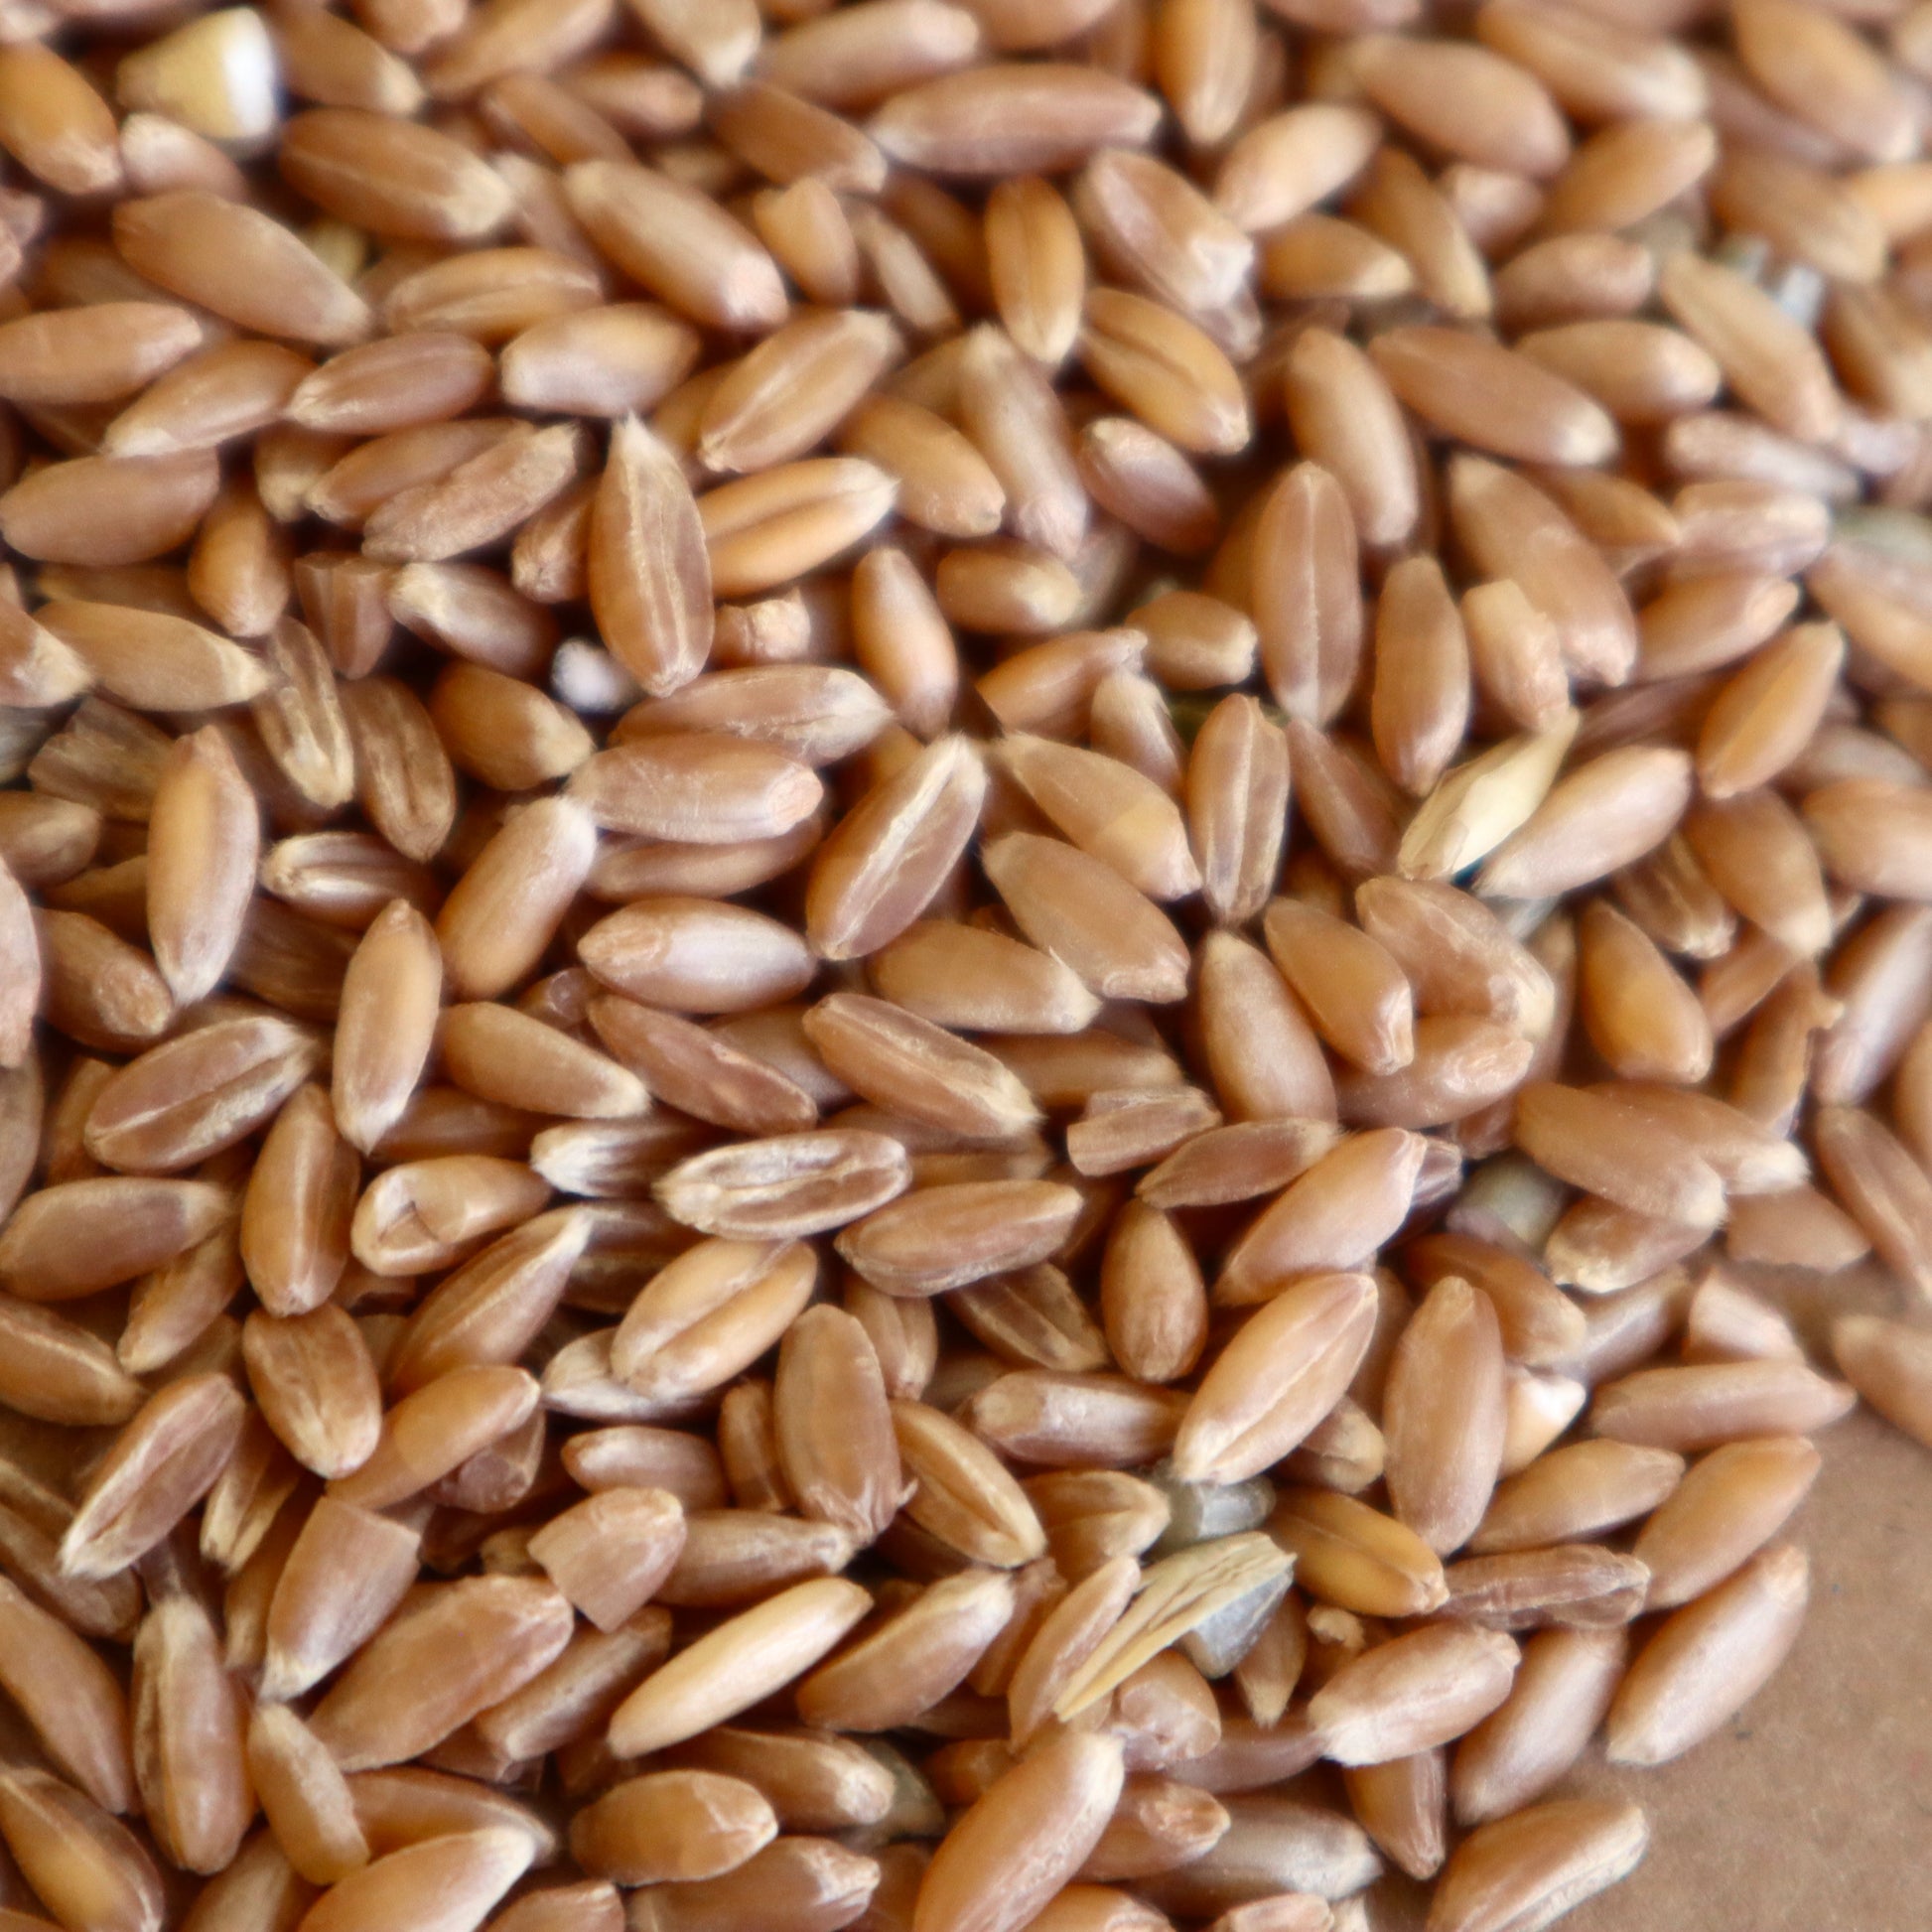 Certified Organic Spelt grain